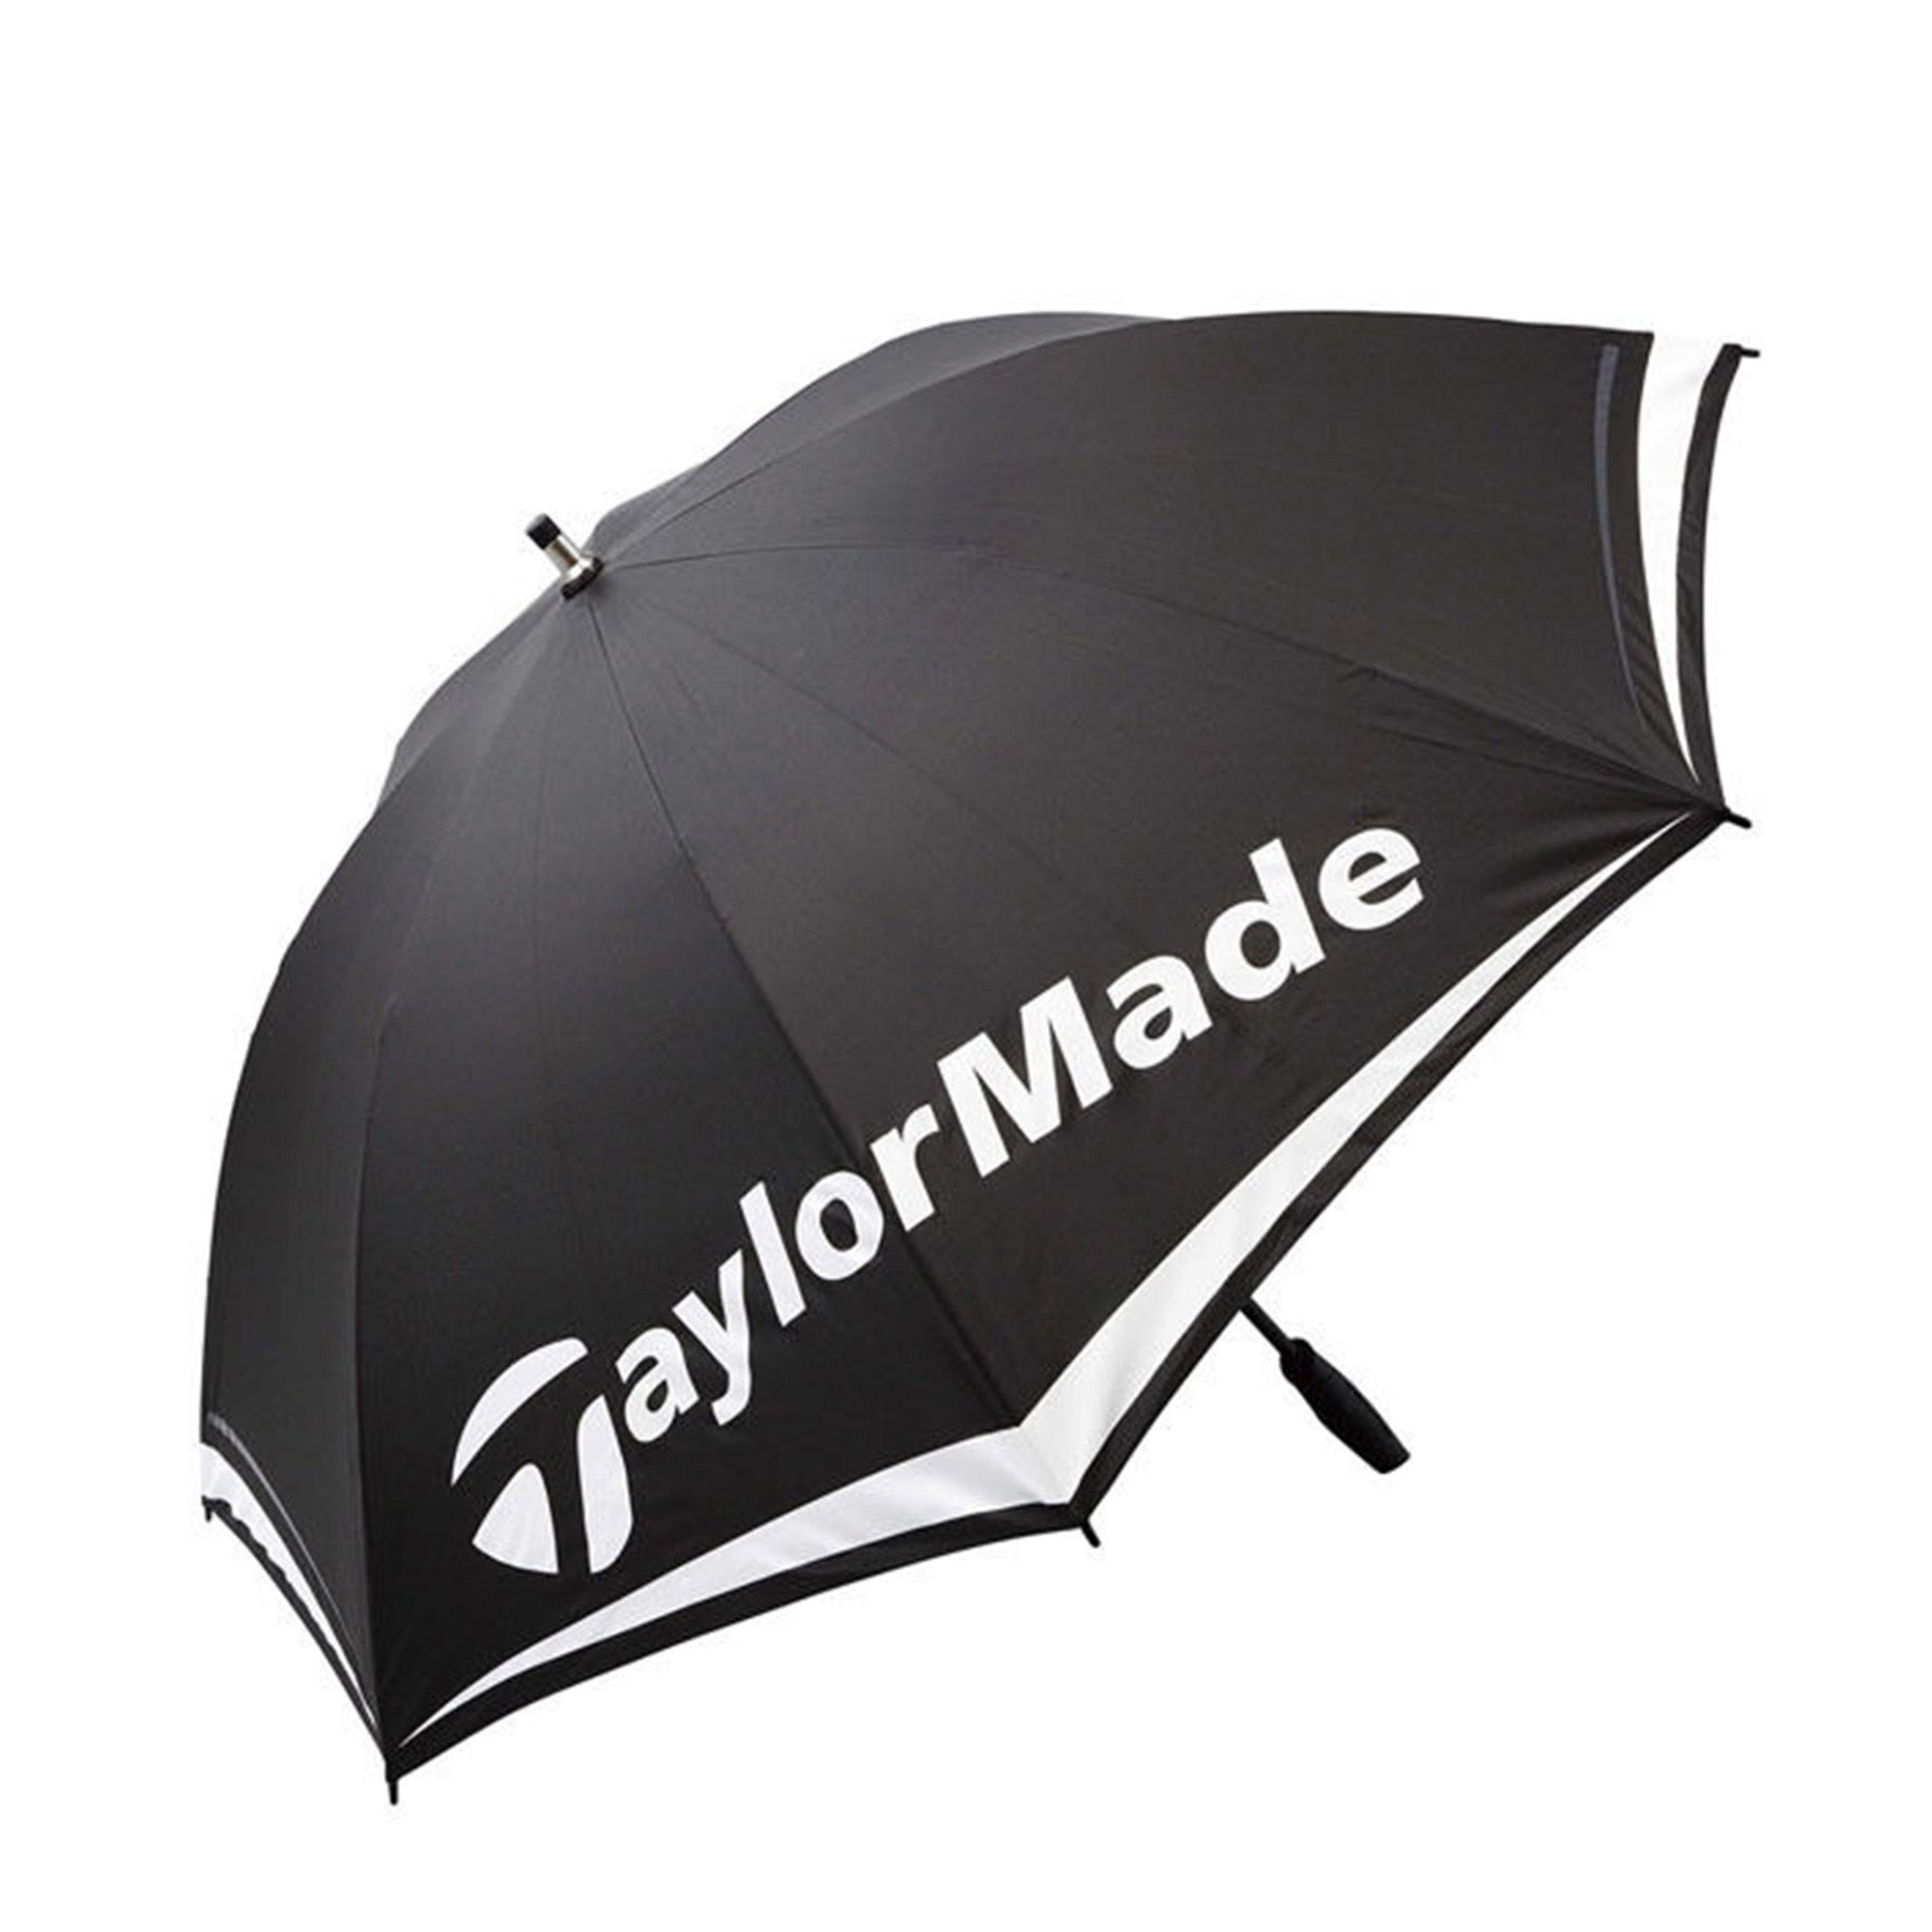 taylormade-single-canopy-golf-umbrella-b16008